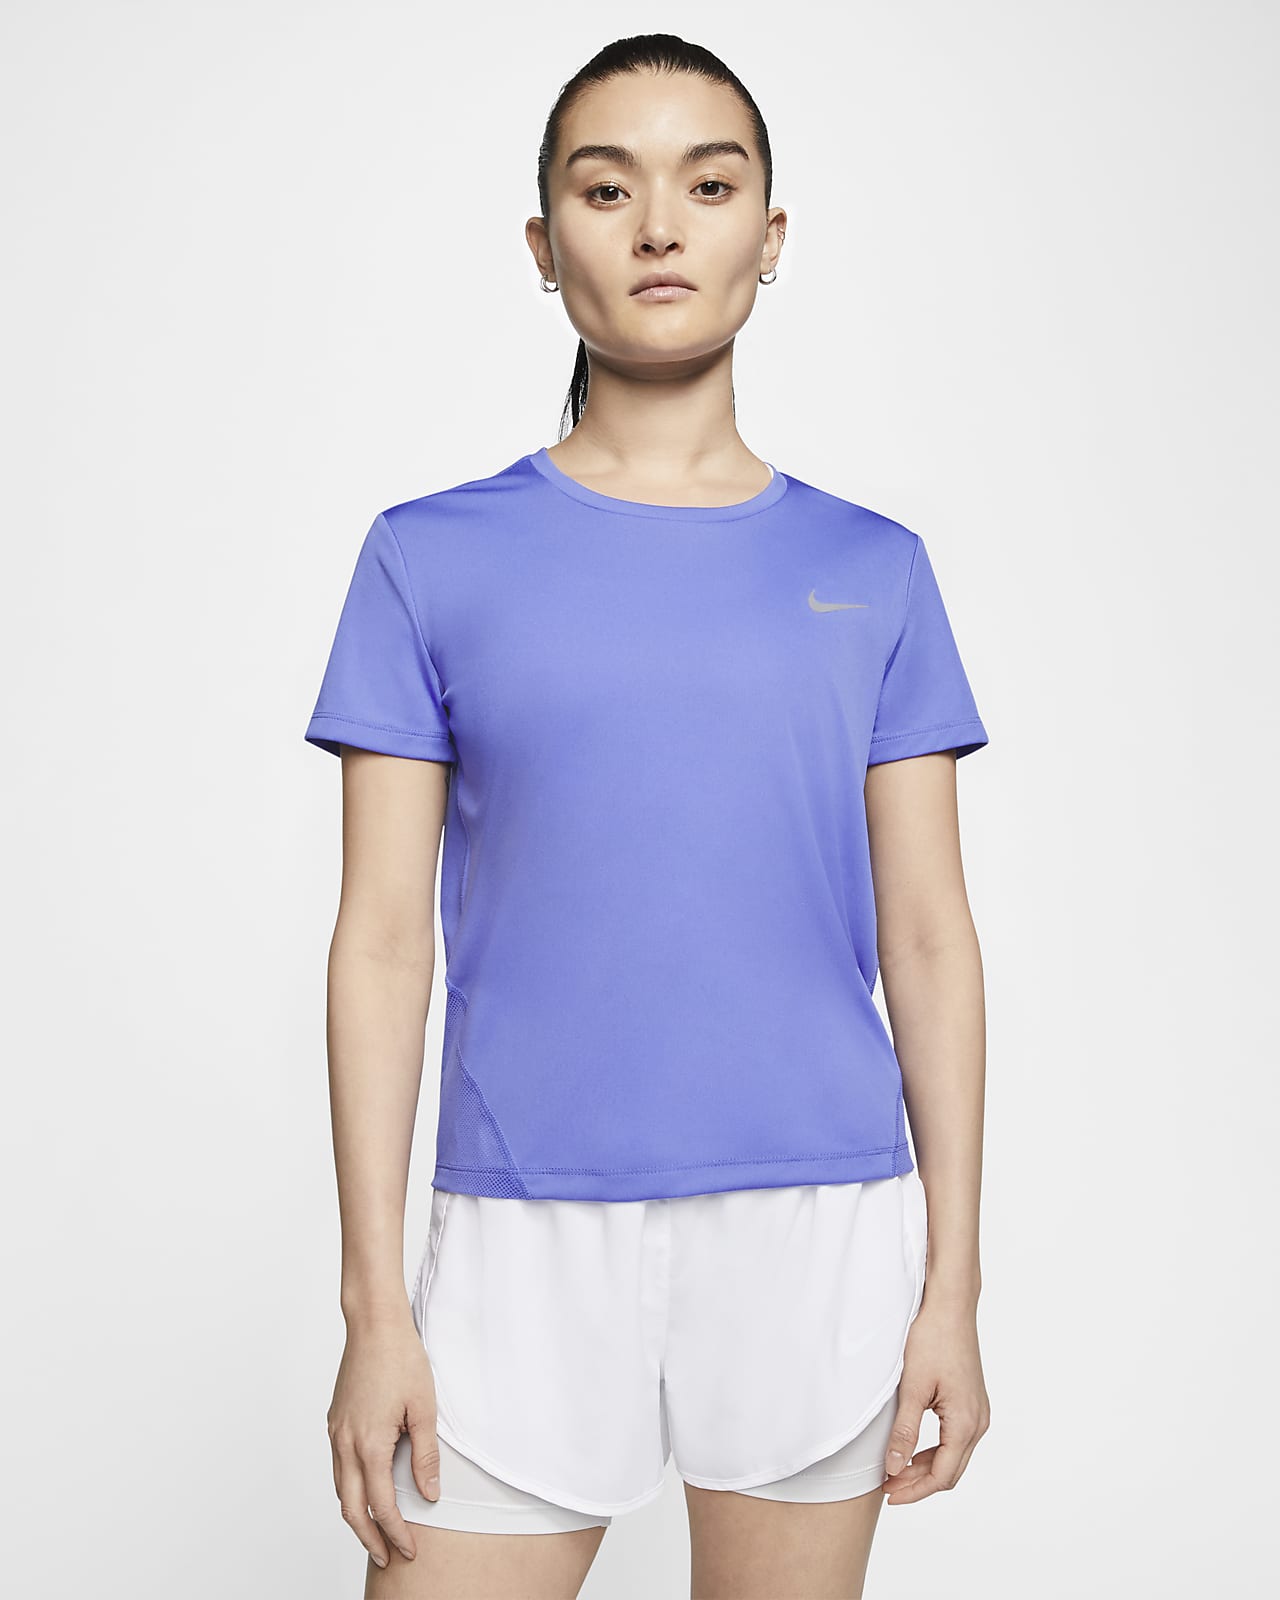 Short-Sleeve Running Top. Nike LU